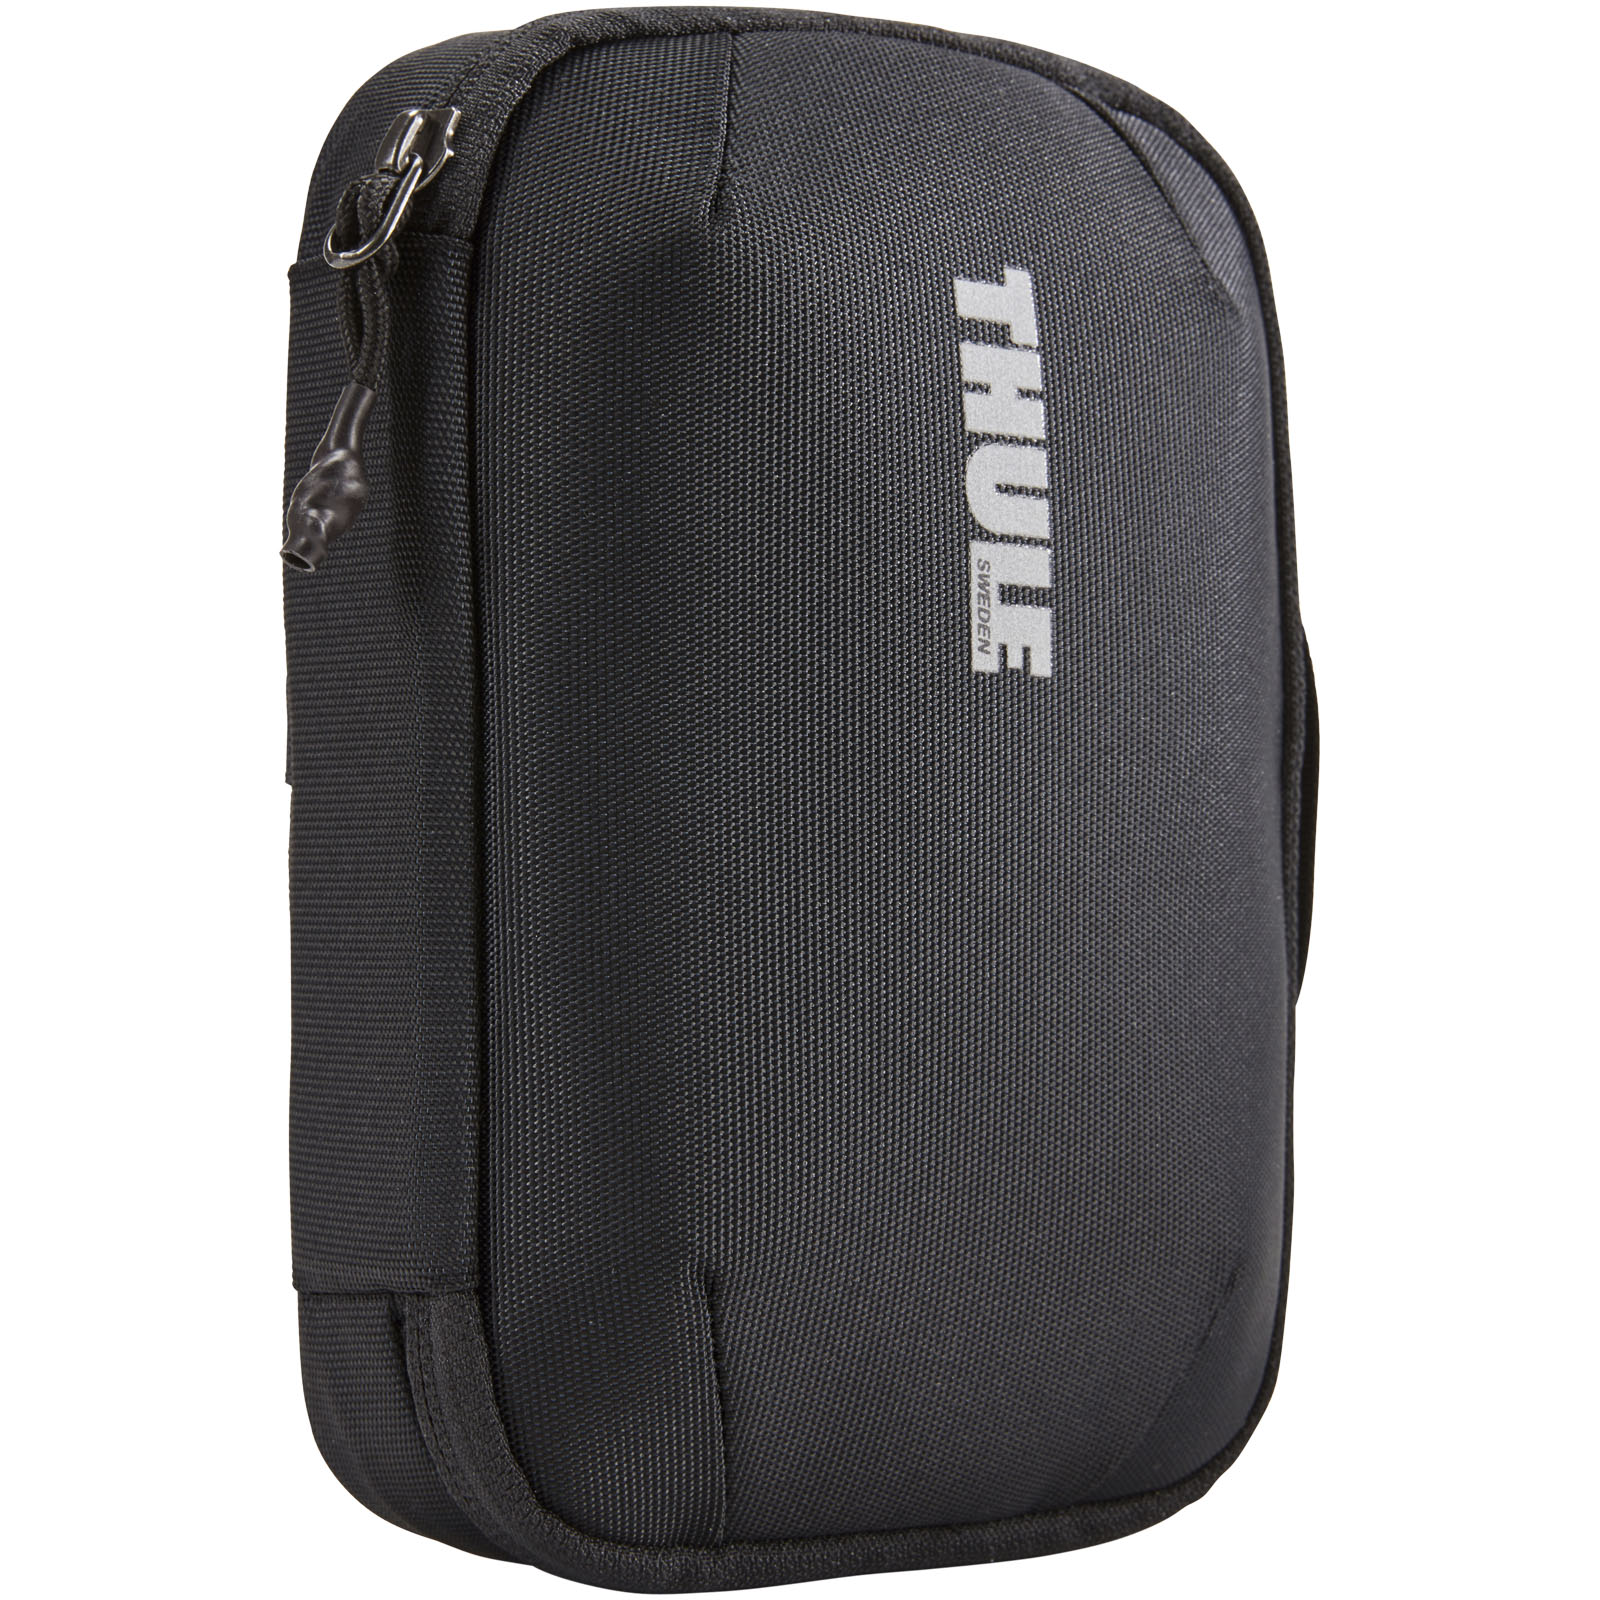 Advertising Travel Accessories - Thule Subterra PowerShuttle accessories bag